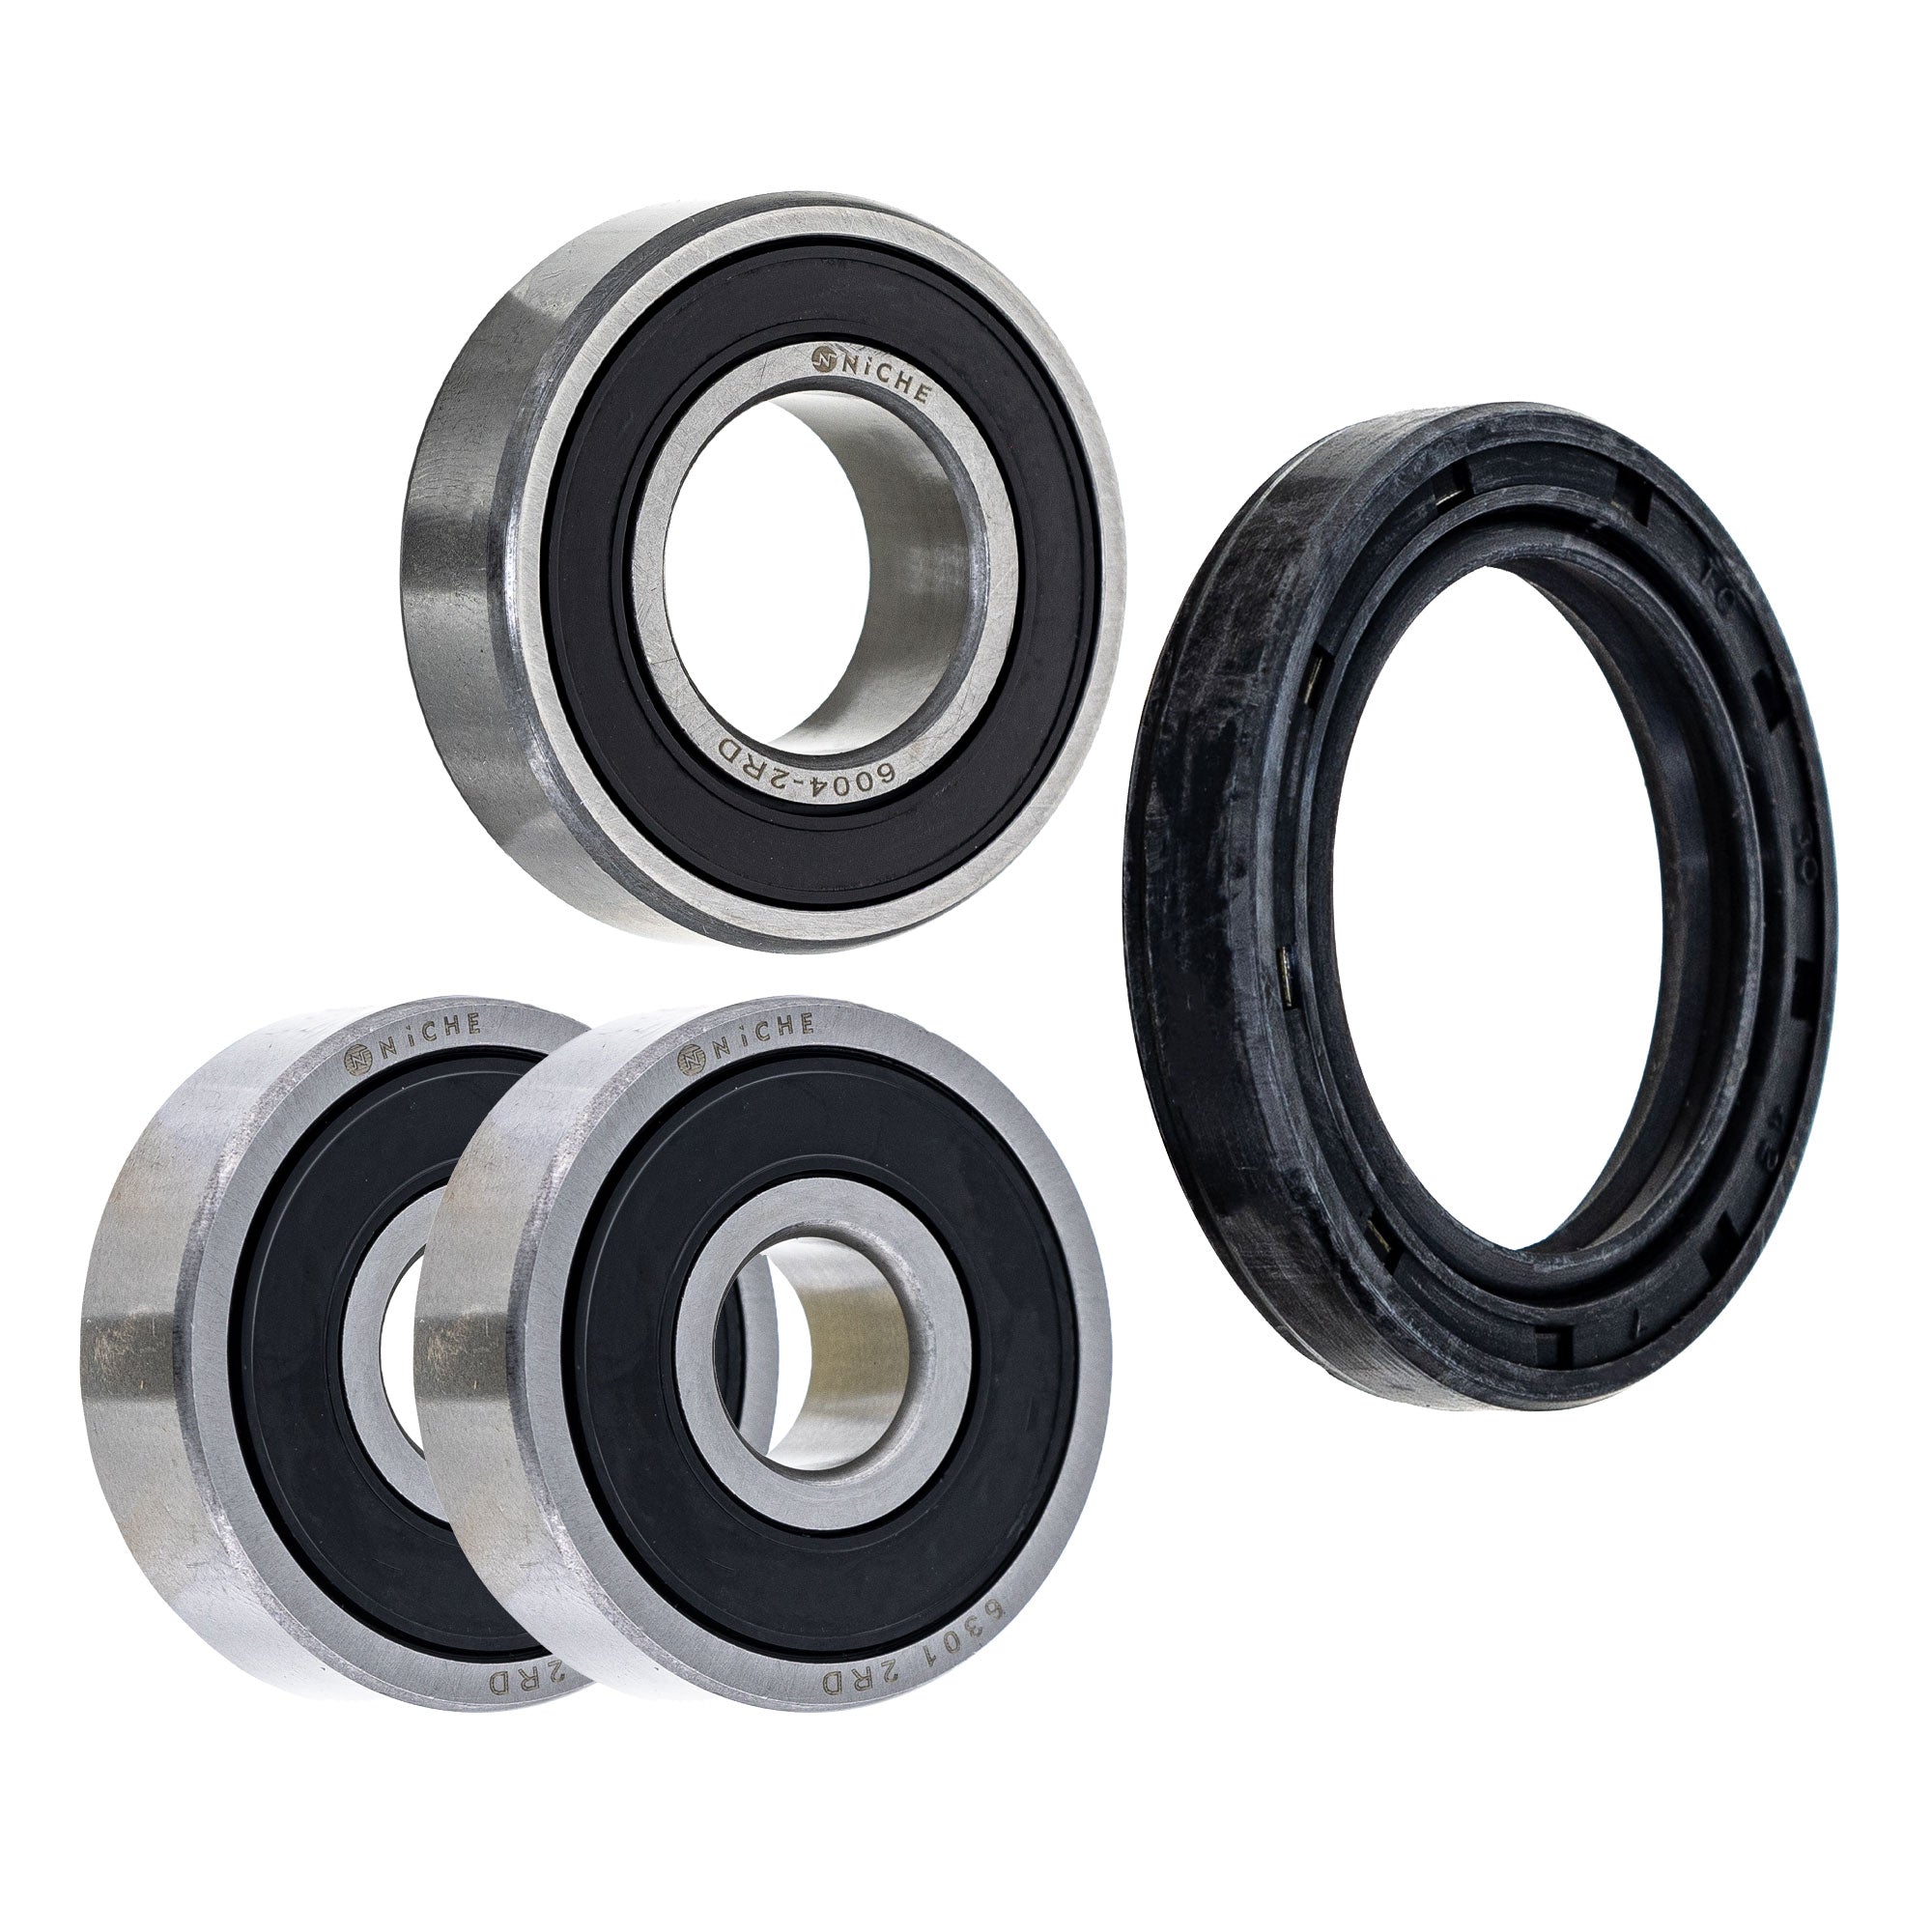 Wheel Bearing Seal Kit for zOTHER TTR110E NICHE MK1008983